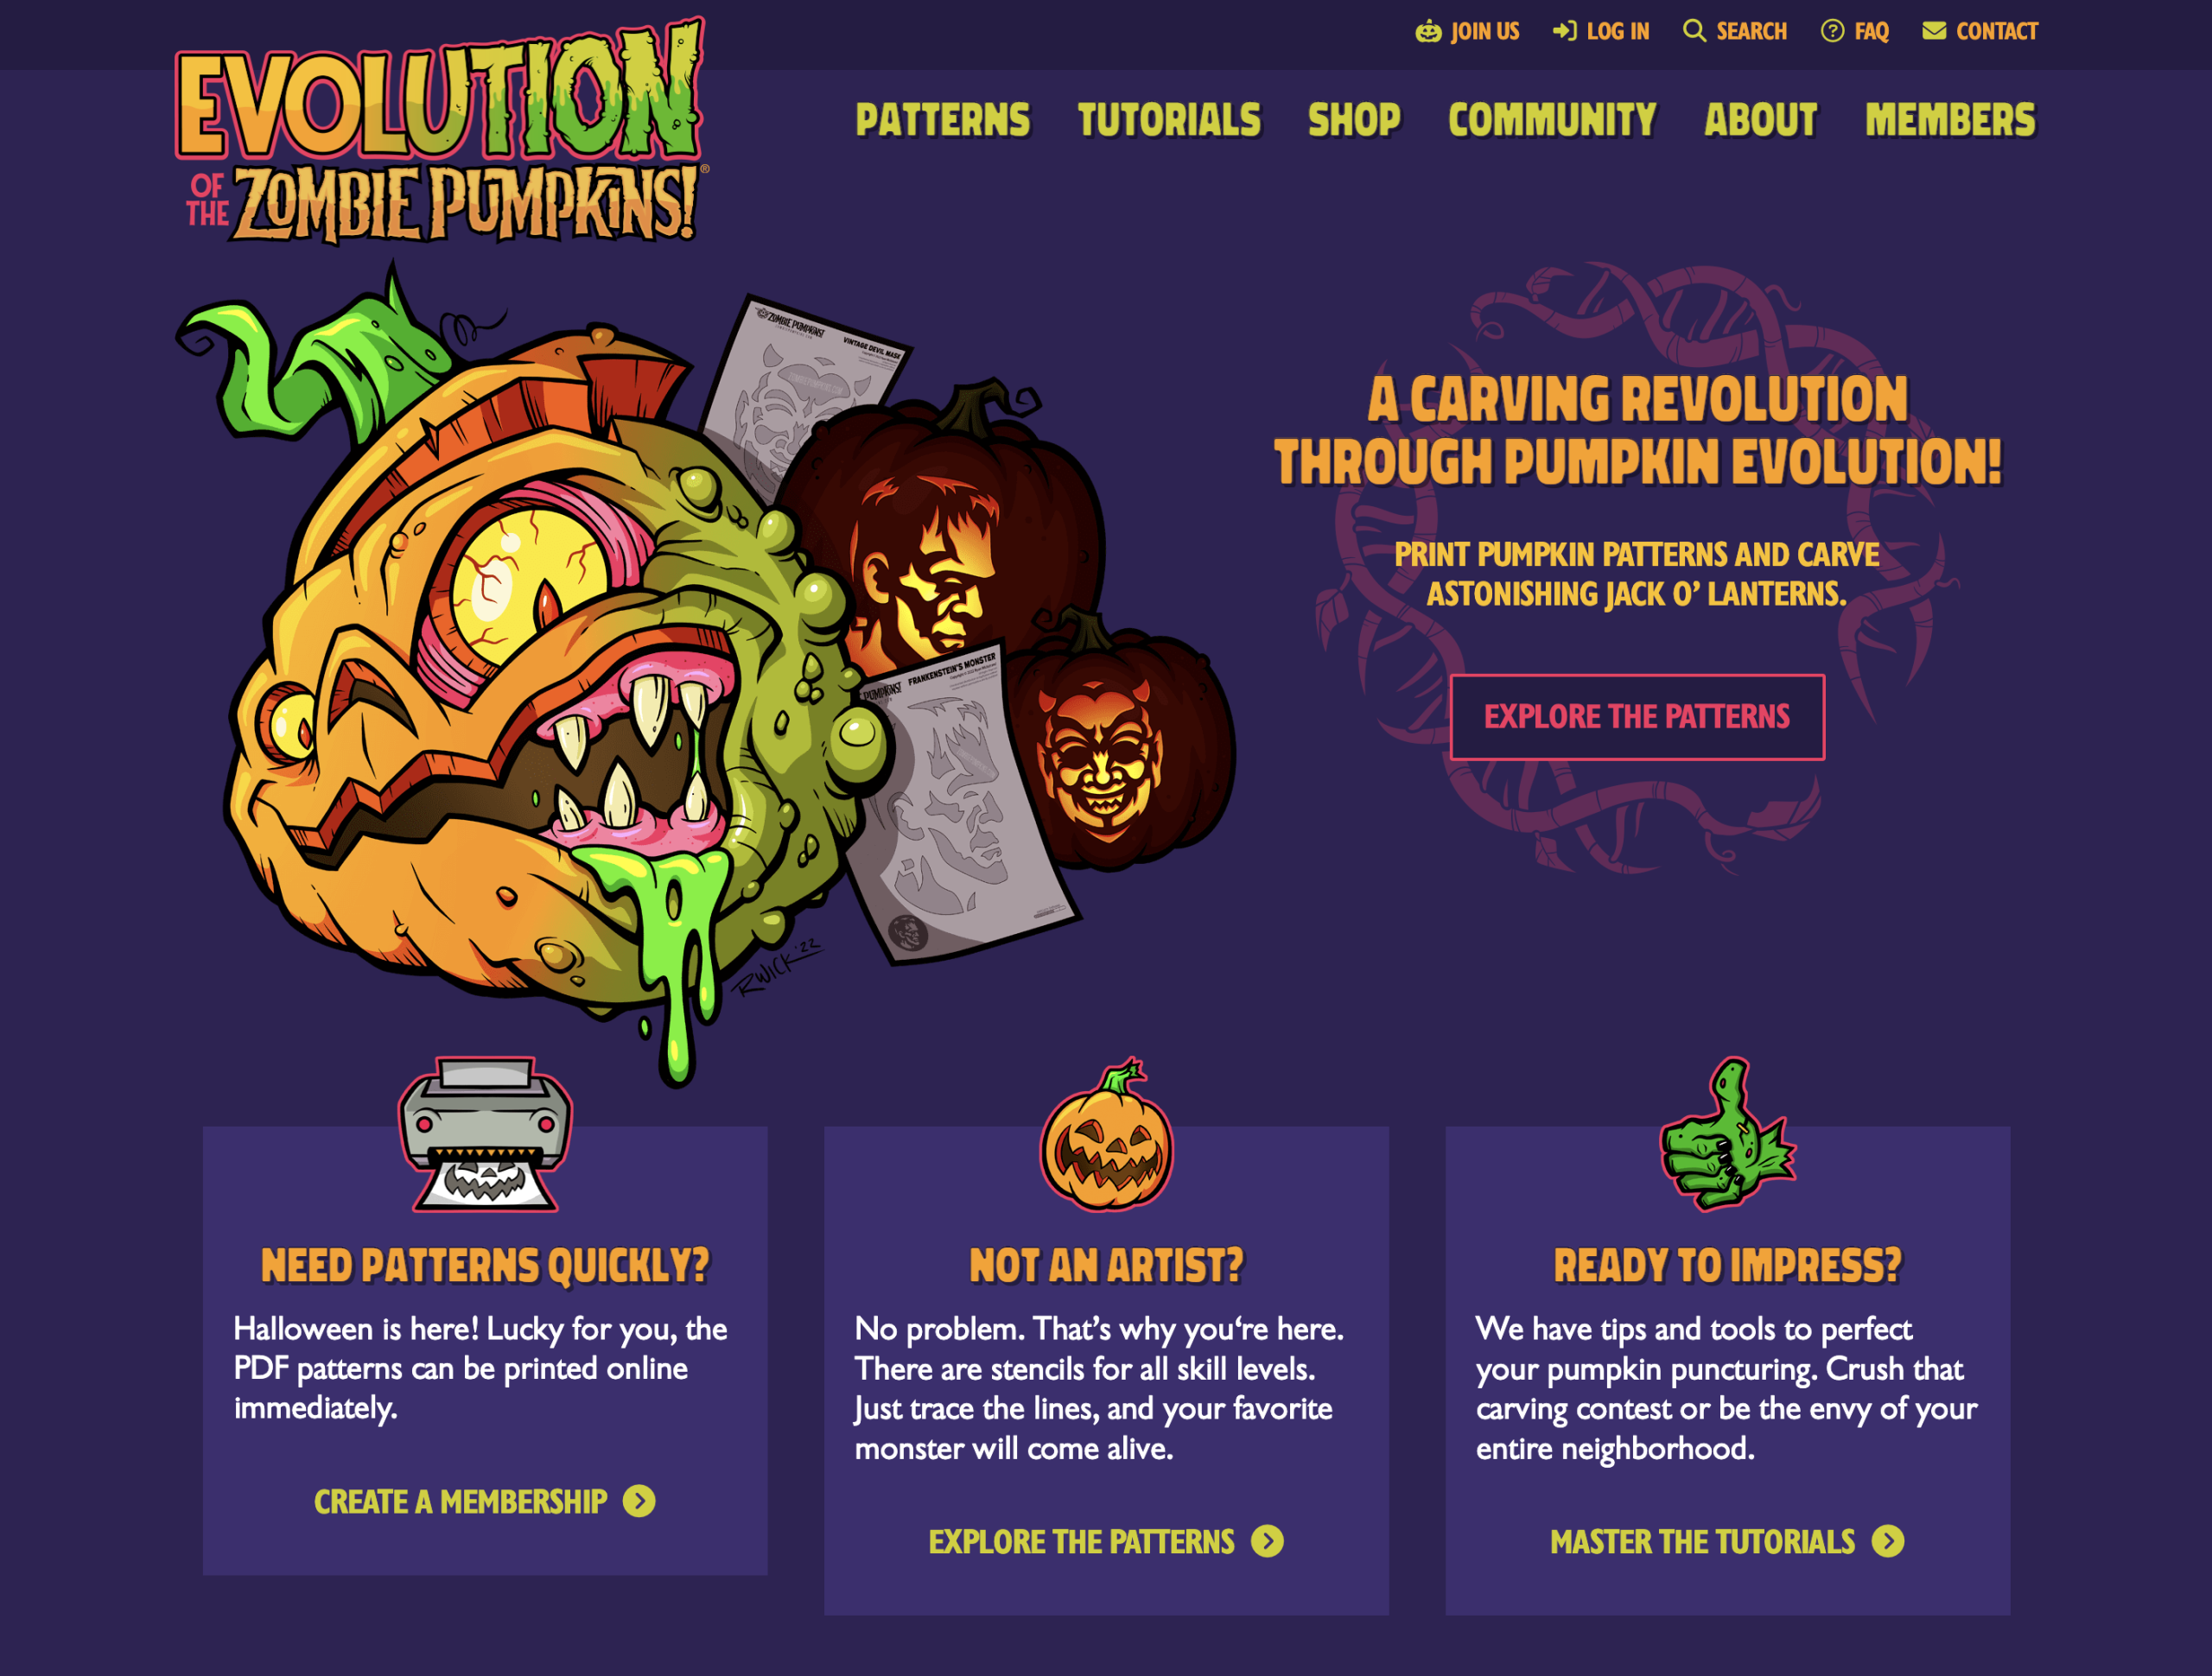 The Zombie Pumpkins website.